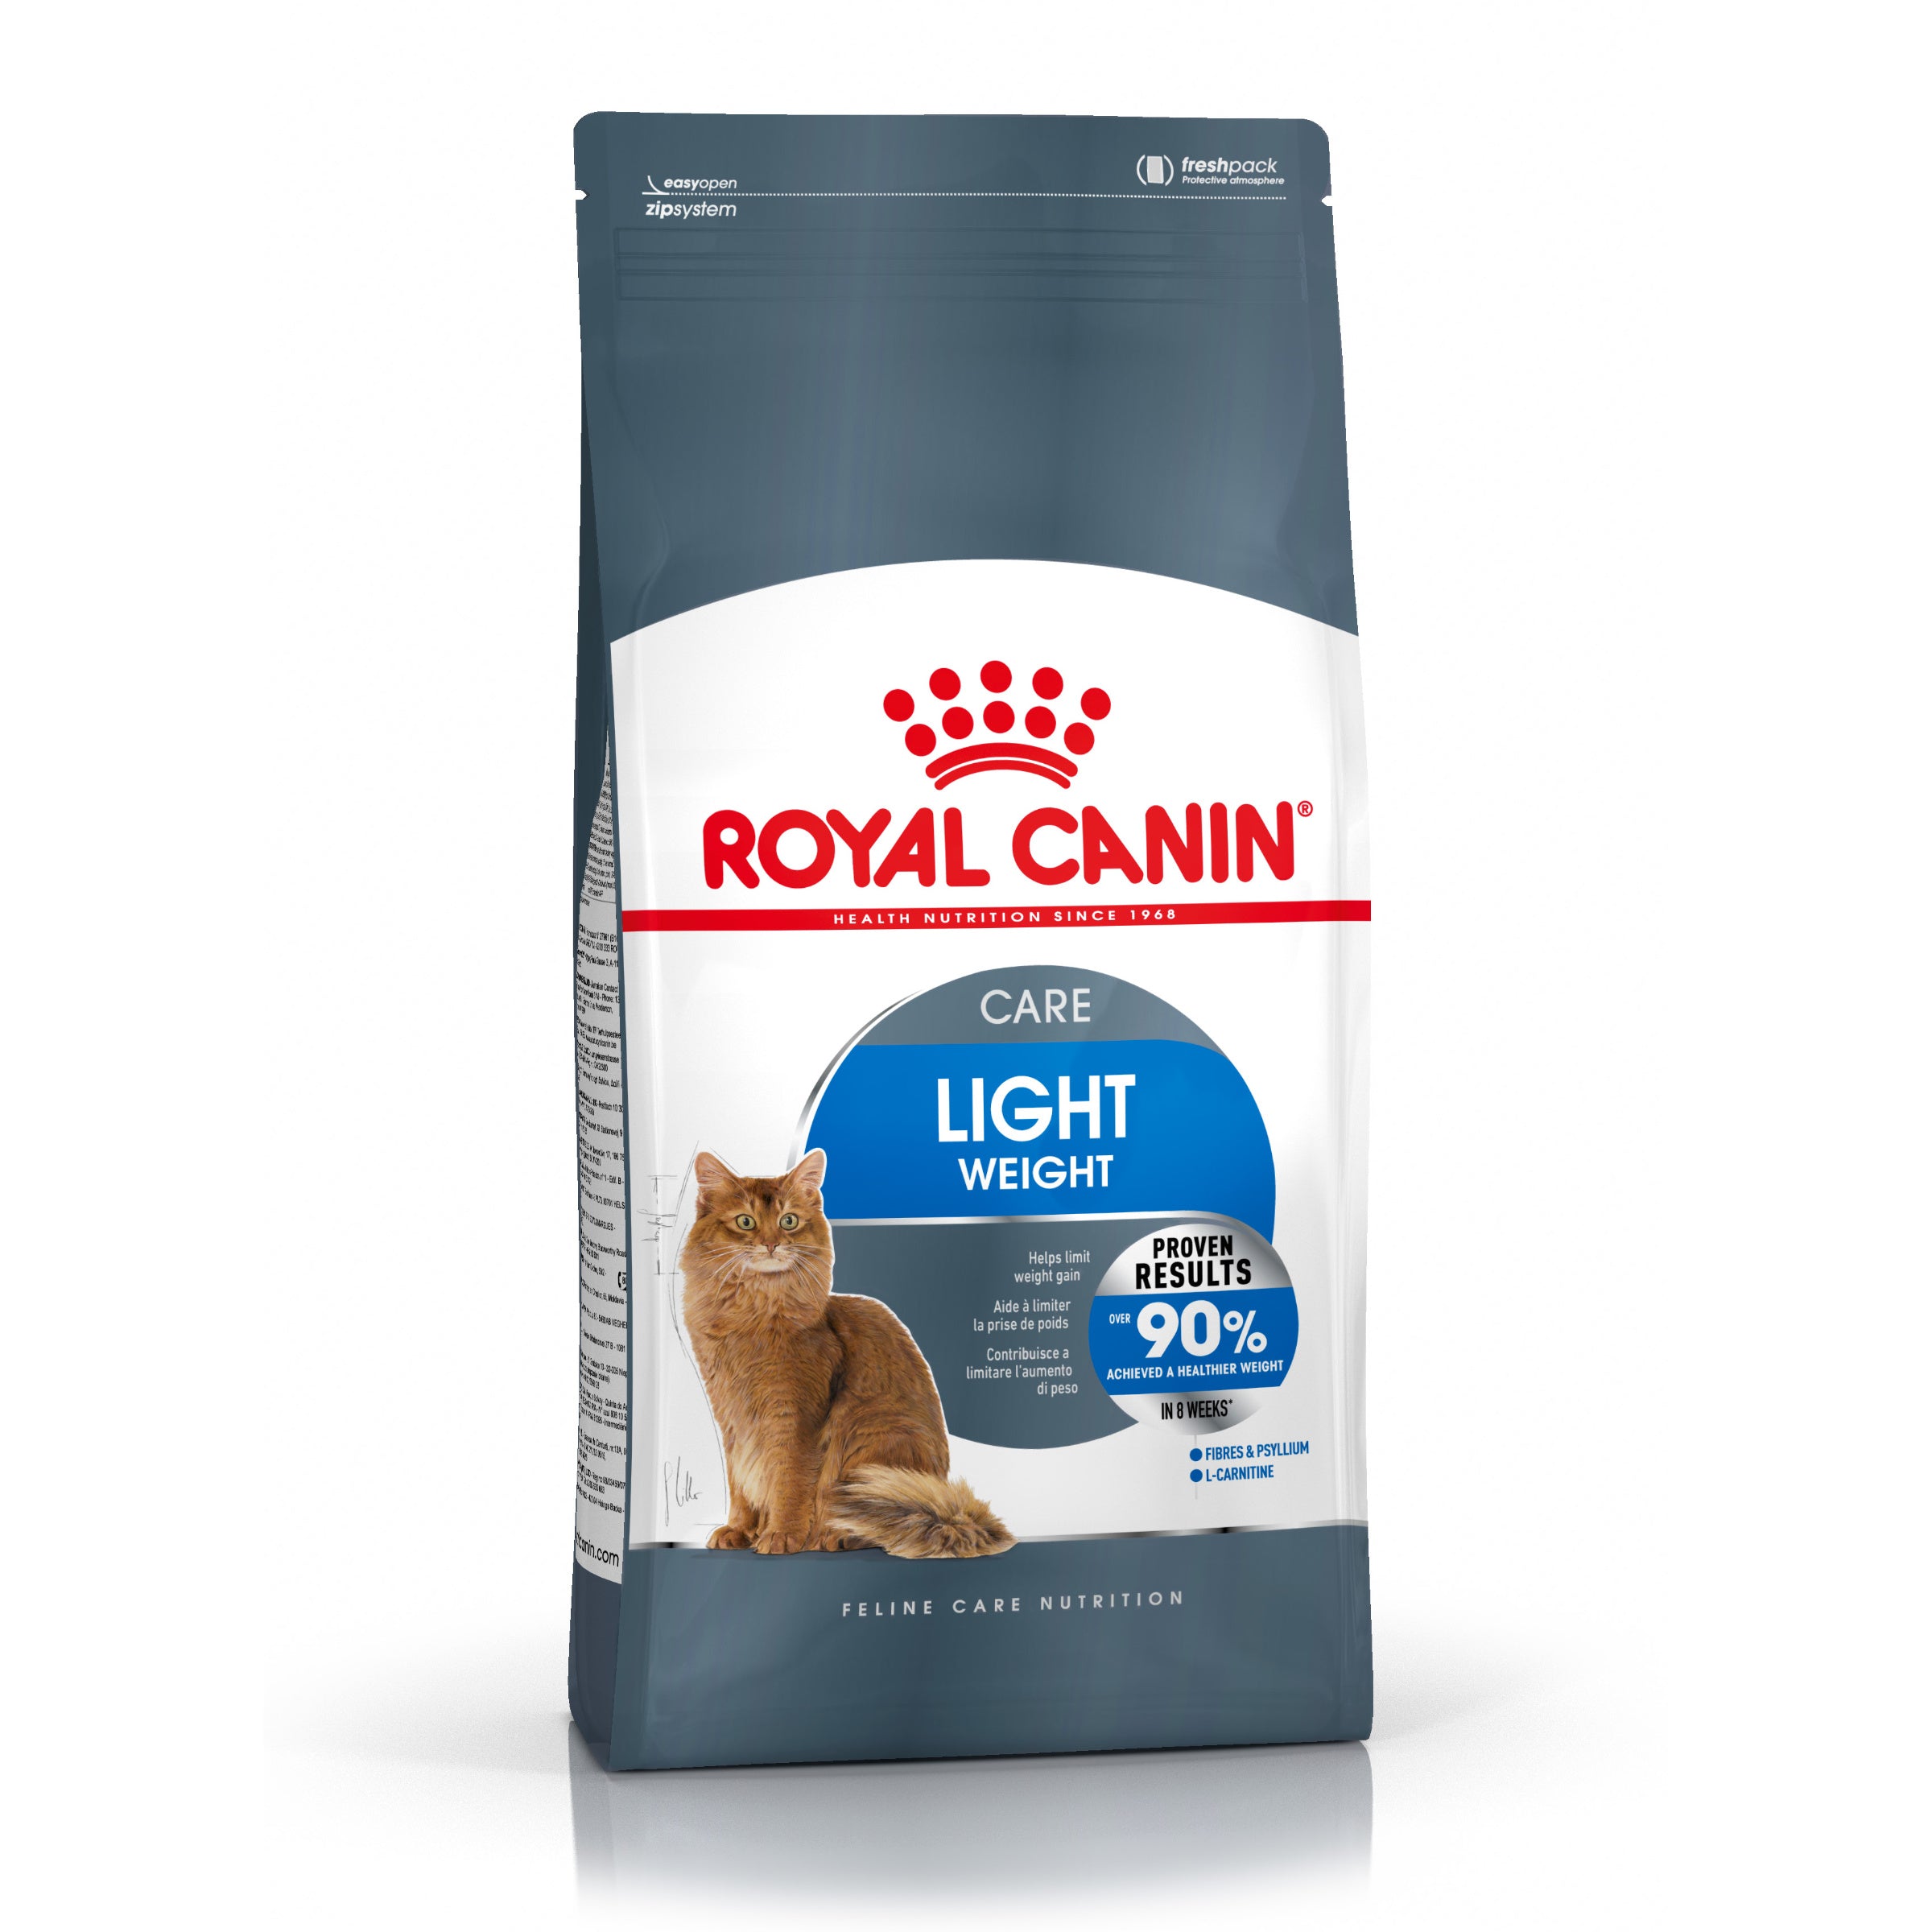 Se Royal canin - Royal Canin Light Weight Care Adult Tørfoder til kat 400g hos Petpower.dk